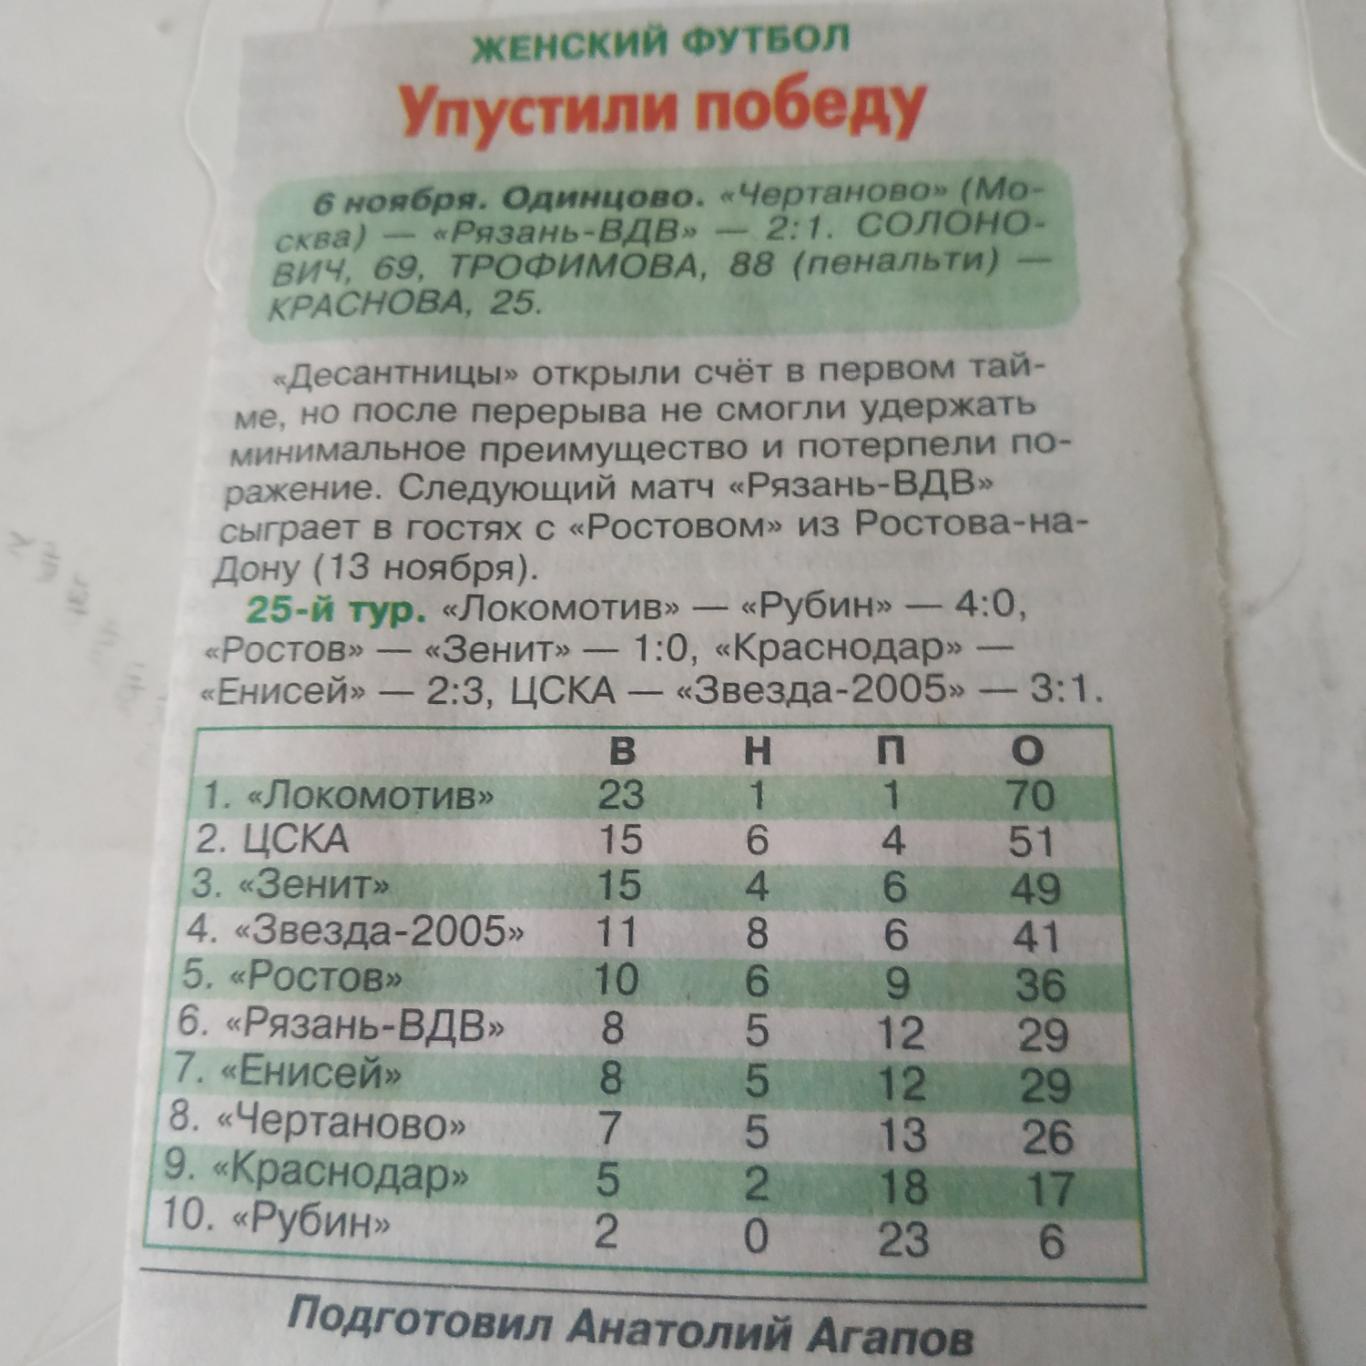 ЖФК Рязань - ВДВ - Чертаново( 2021 )